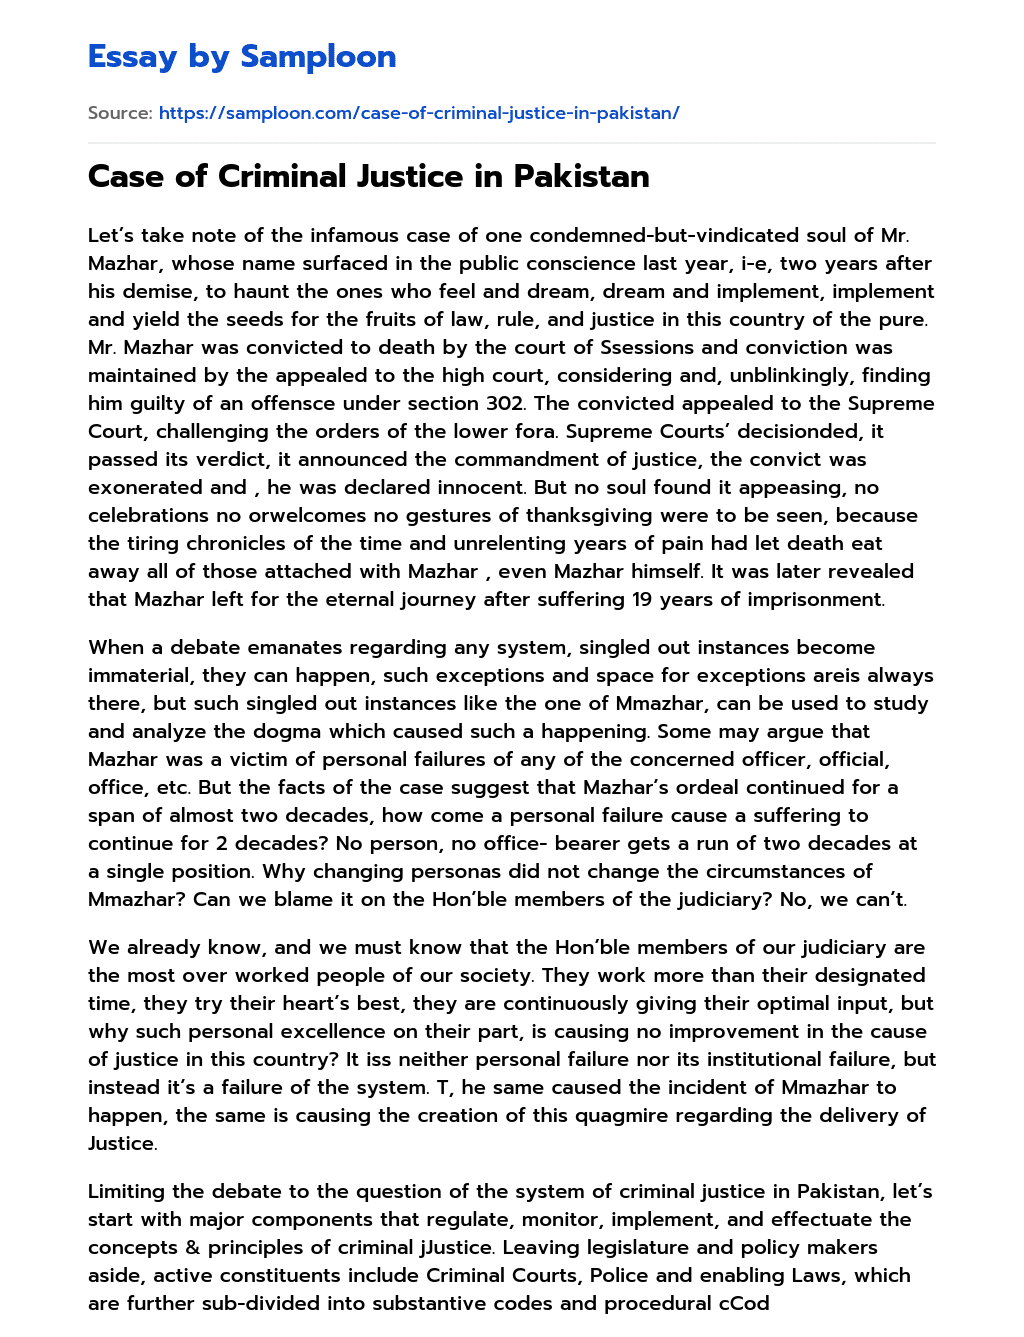 Case of Criminal Justice in Pakistan essay